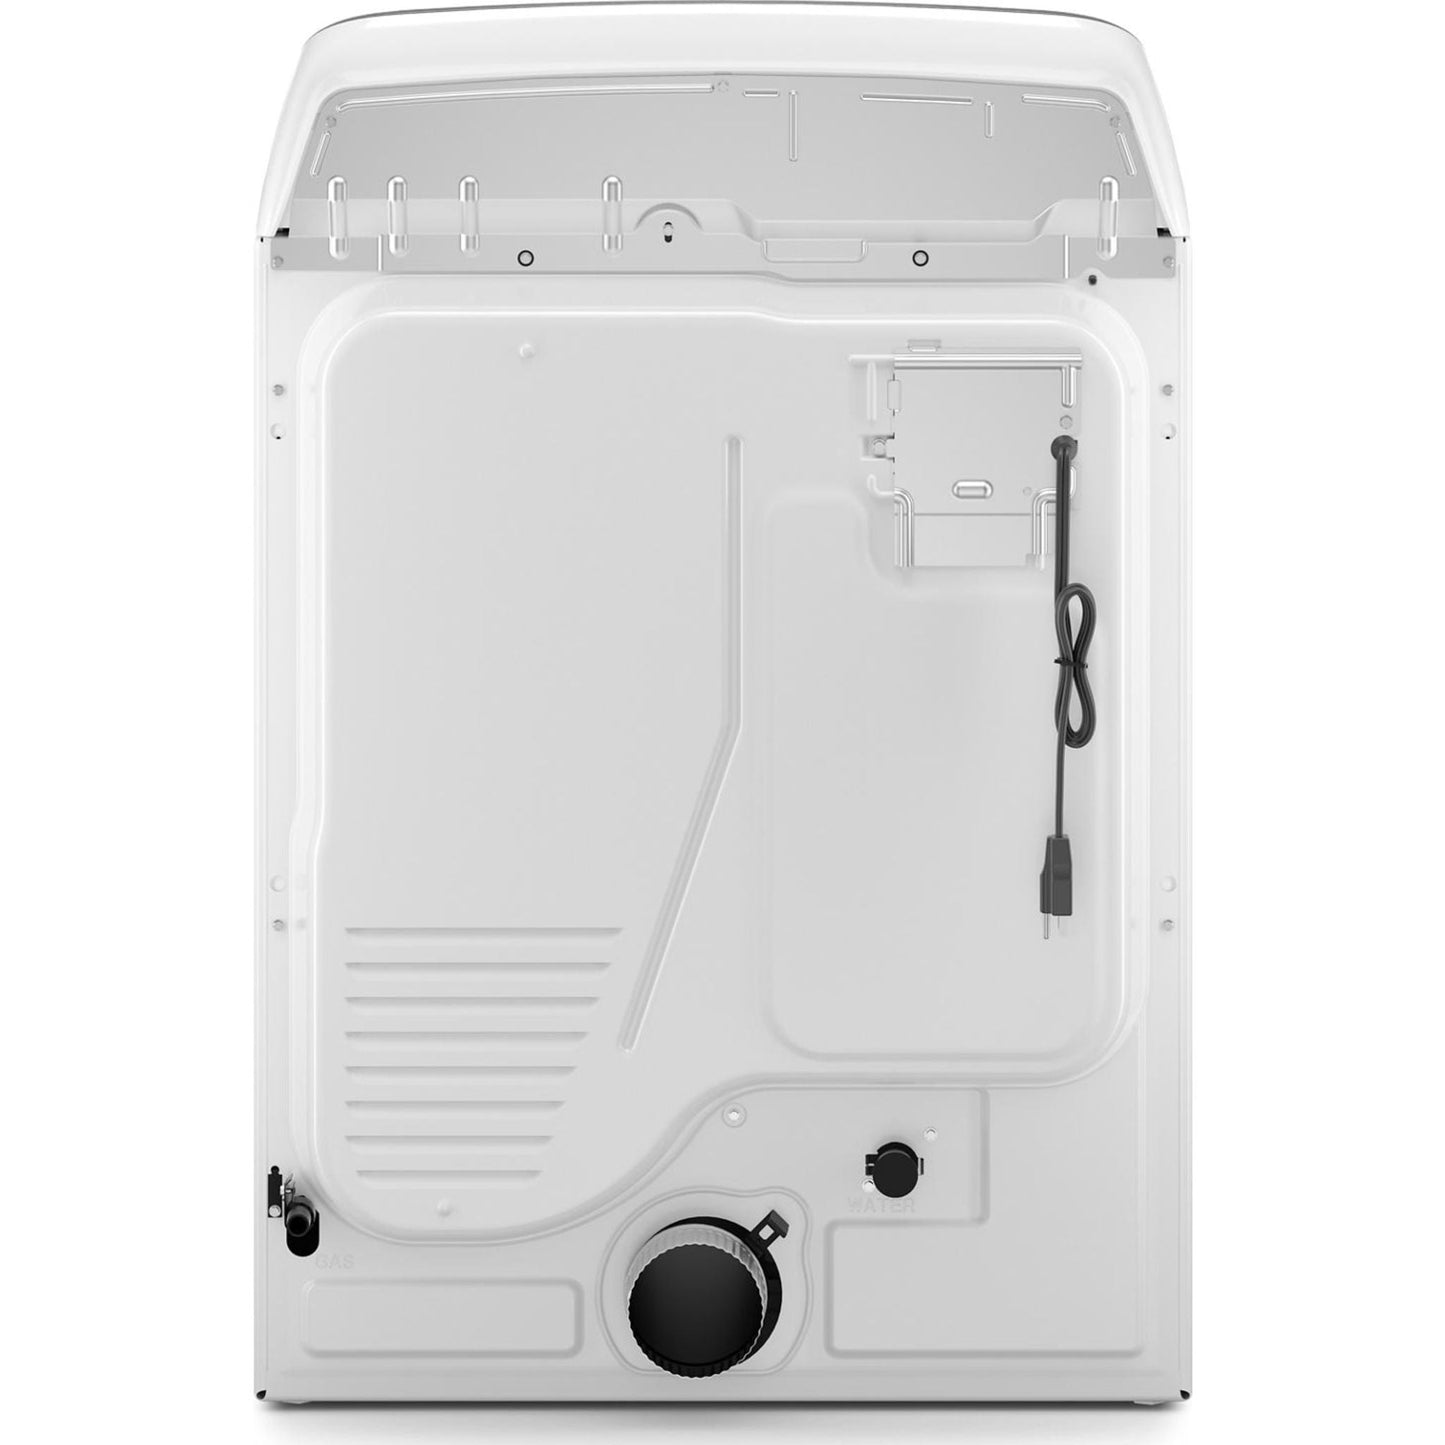 Maytag Gas Dryer (MGD6230HW) - White